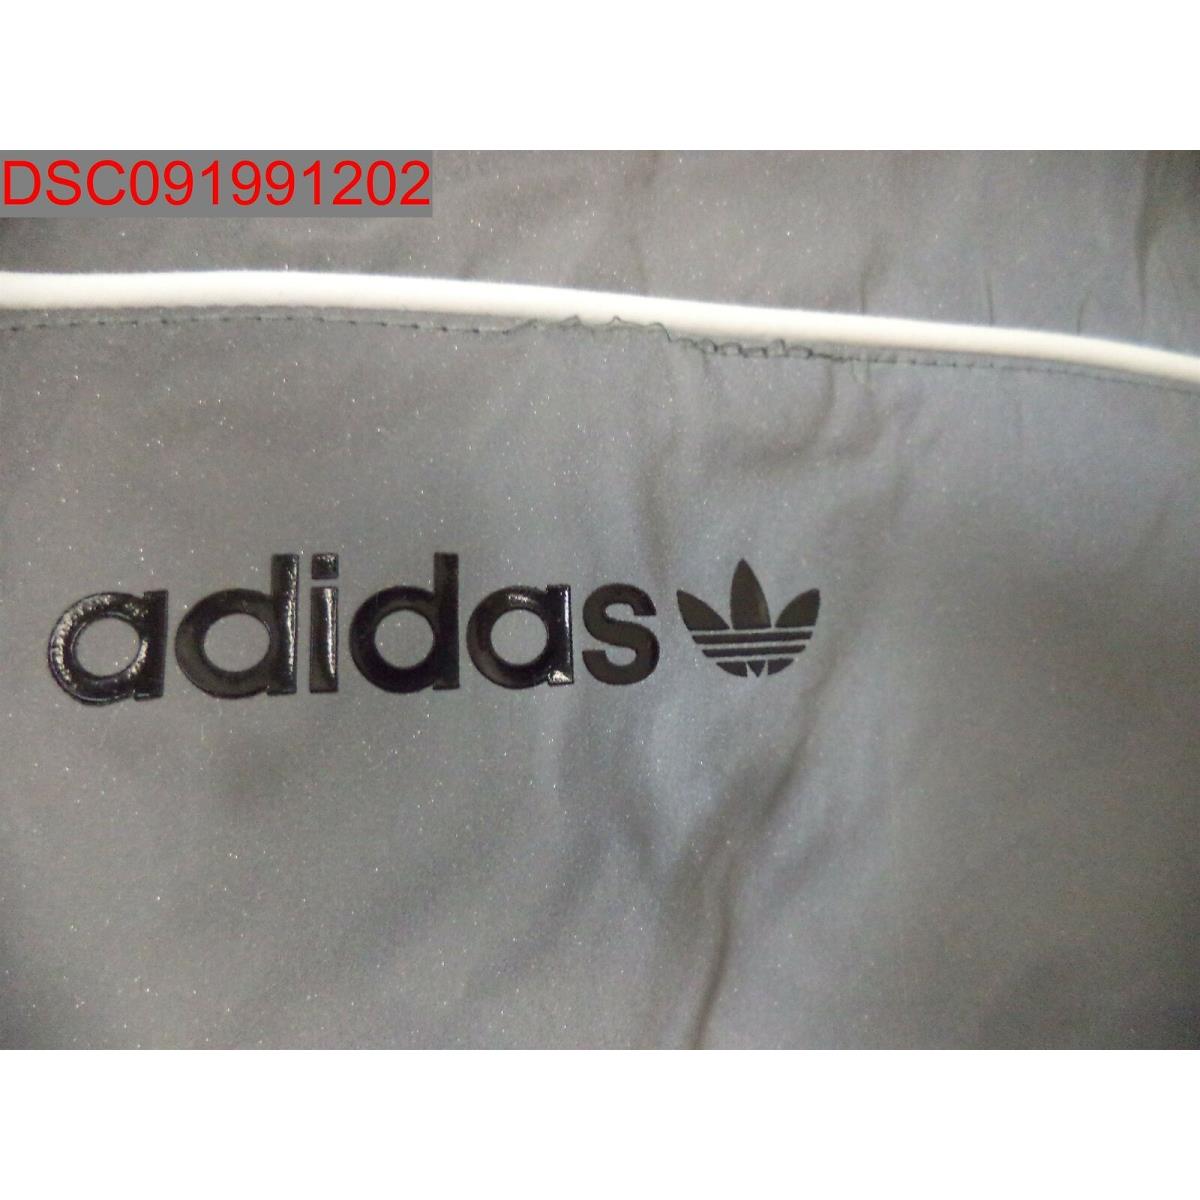 Adidas clothing  - Silver Reflective 3